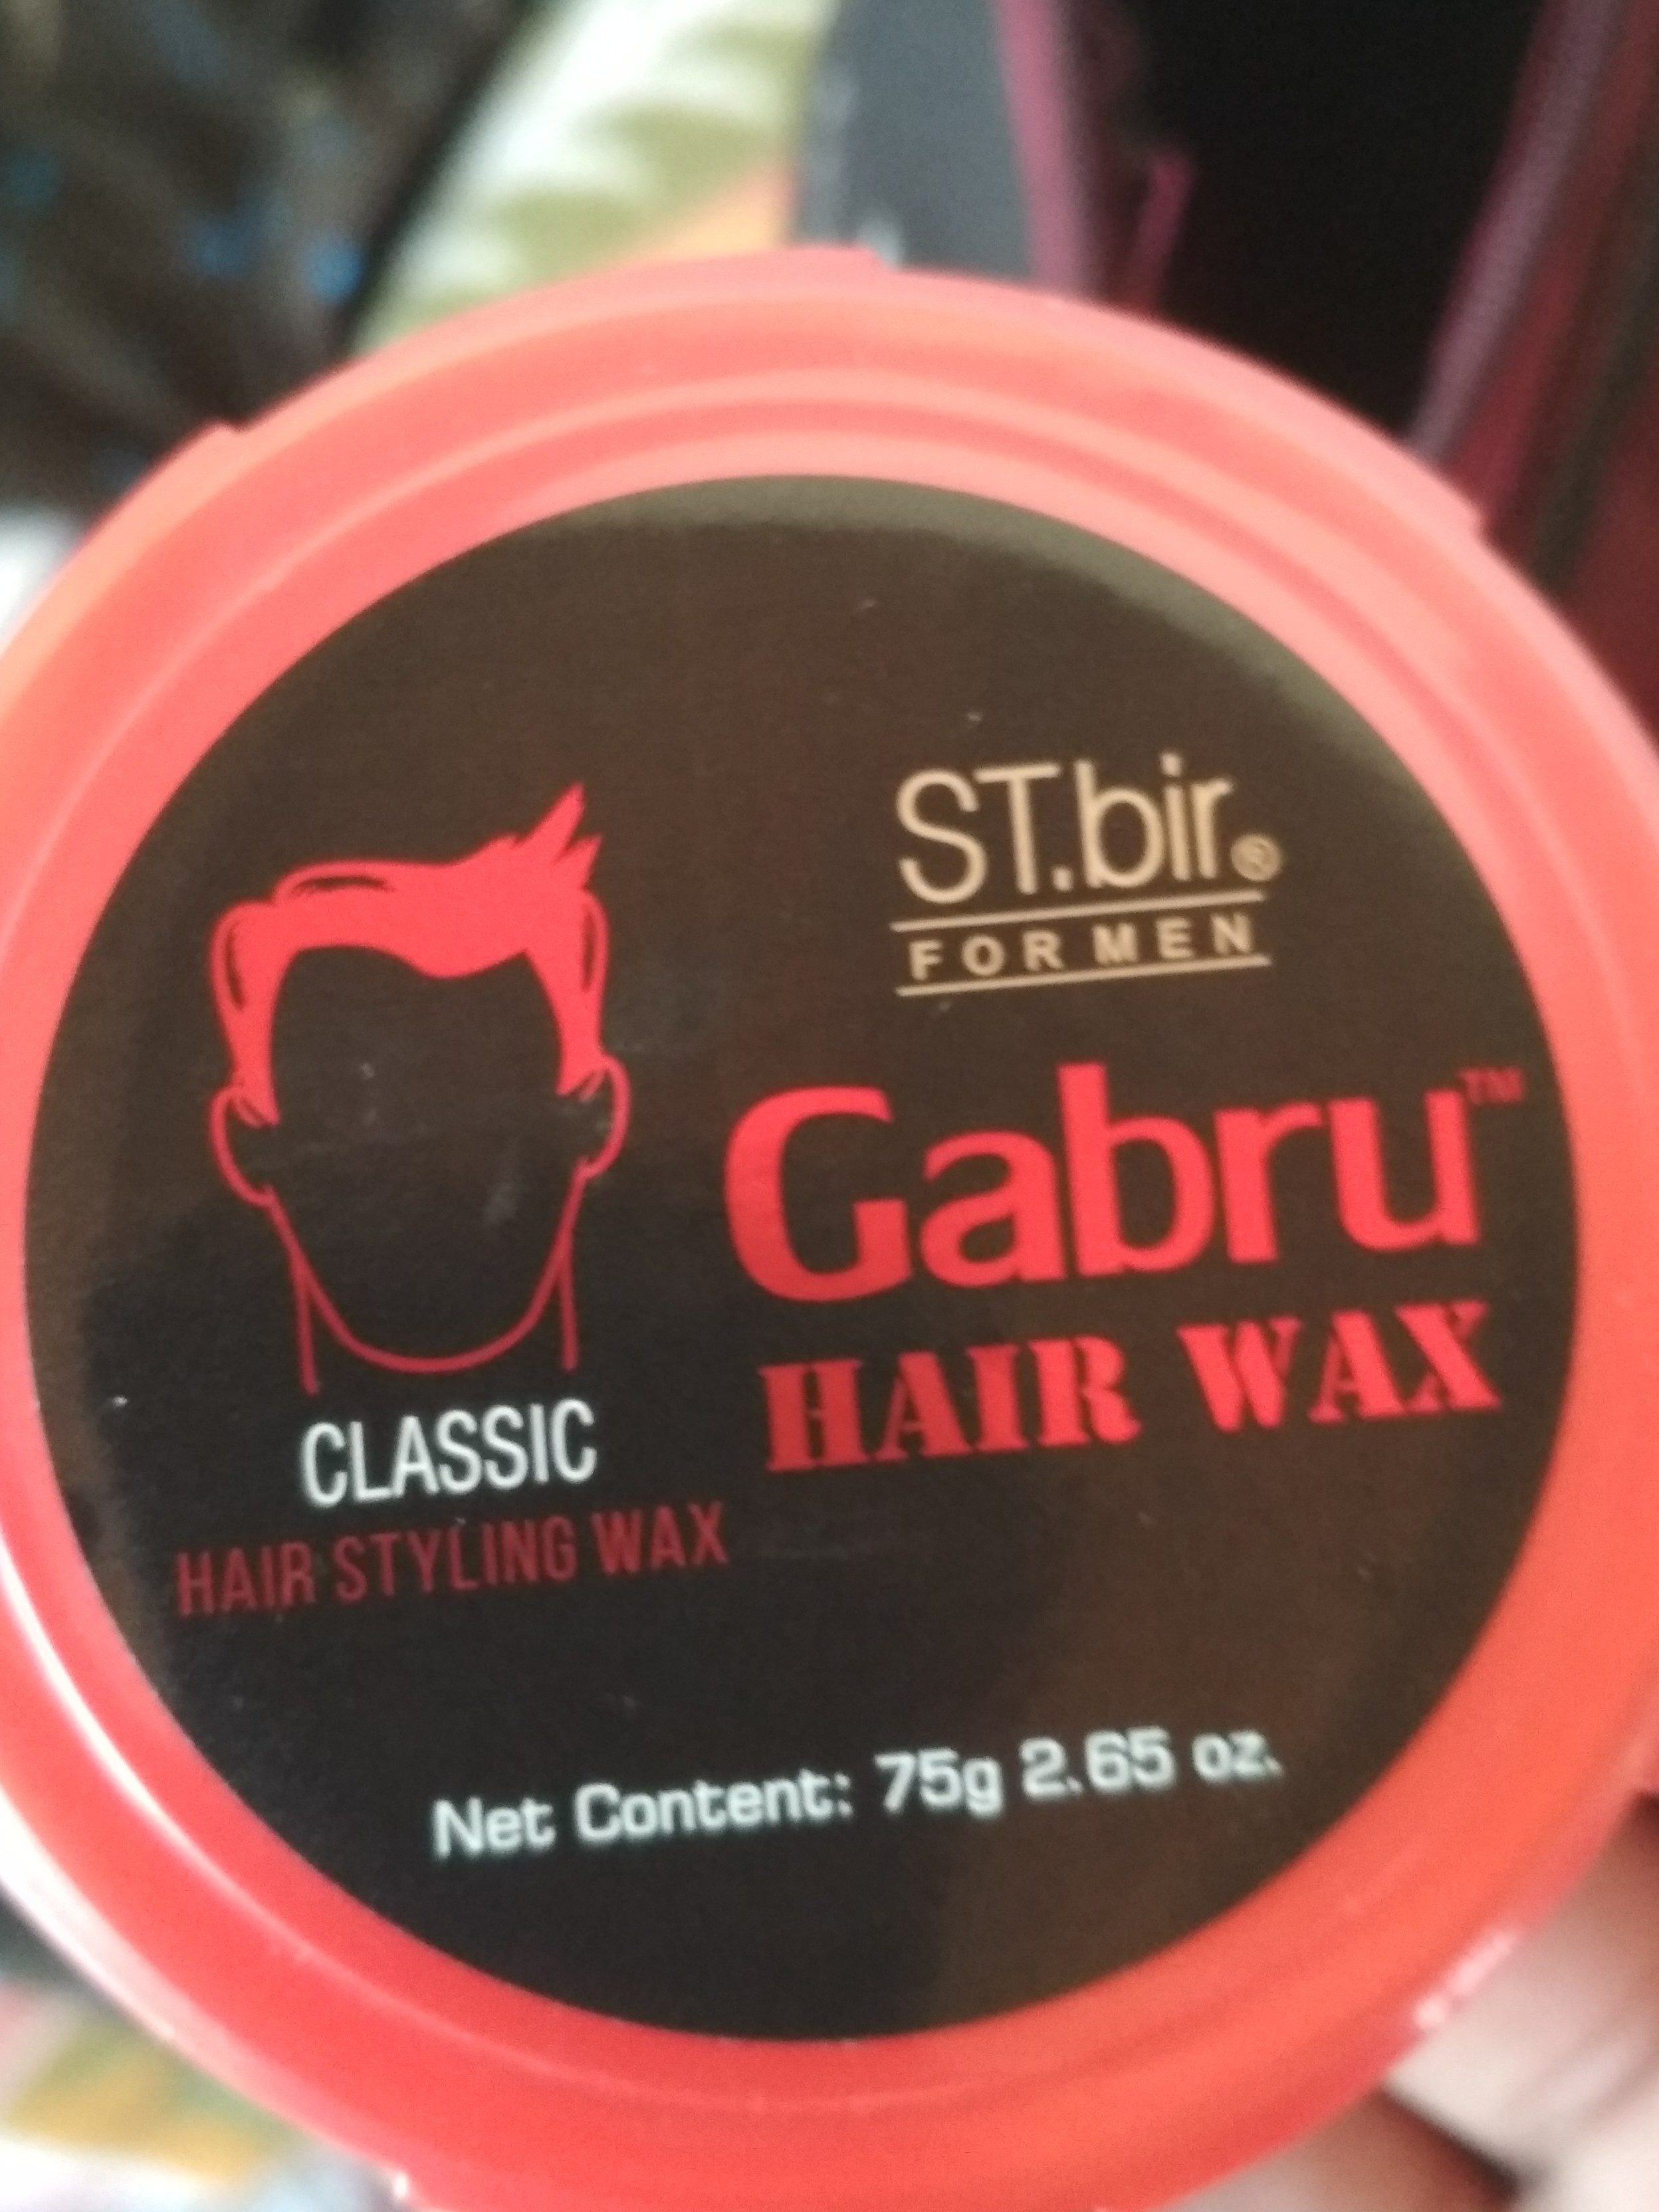 Gabru hair wax - Produkt - en